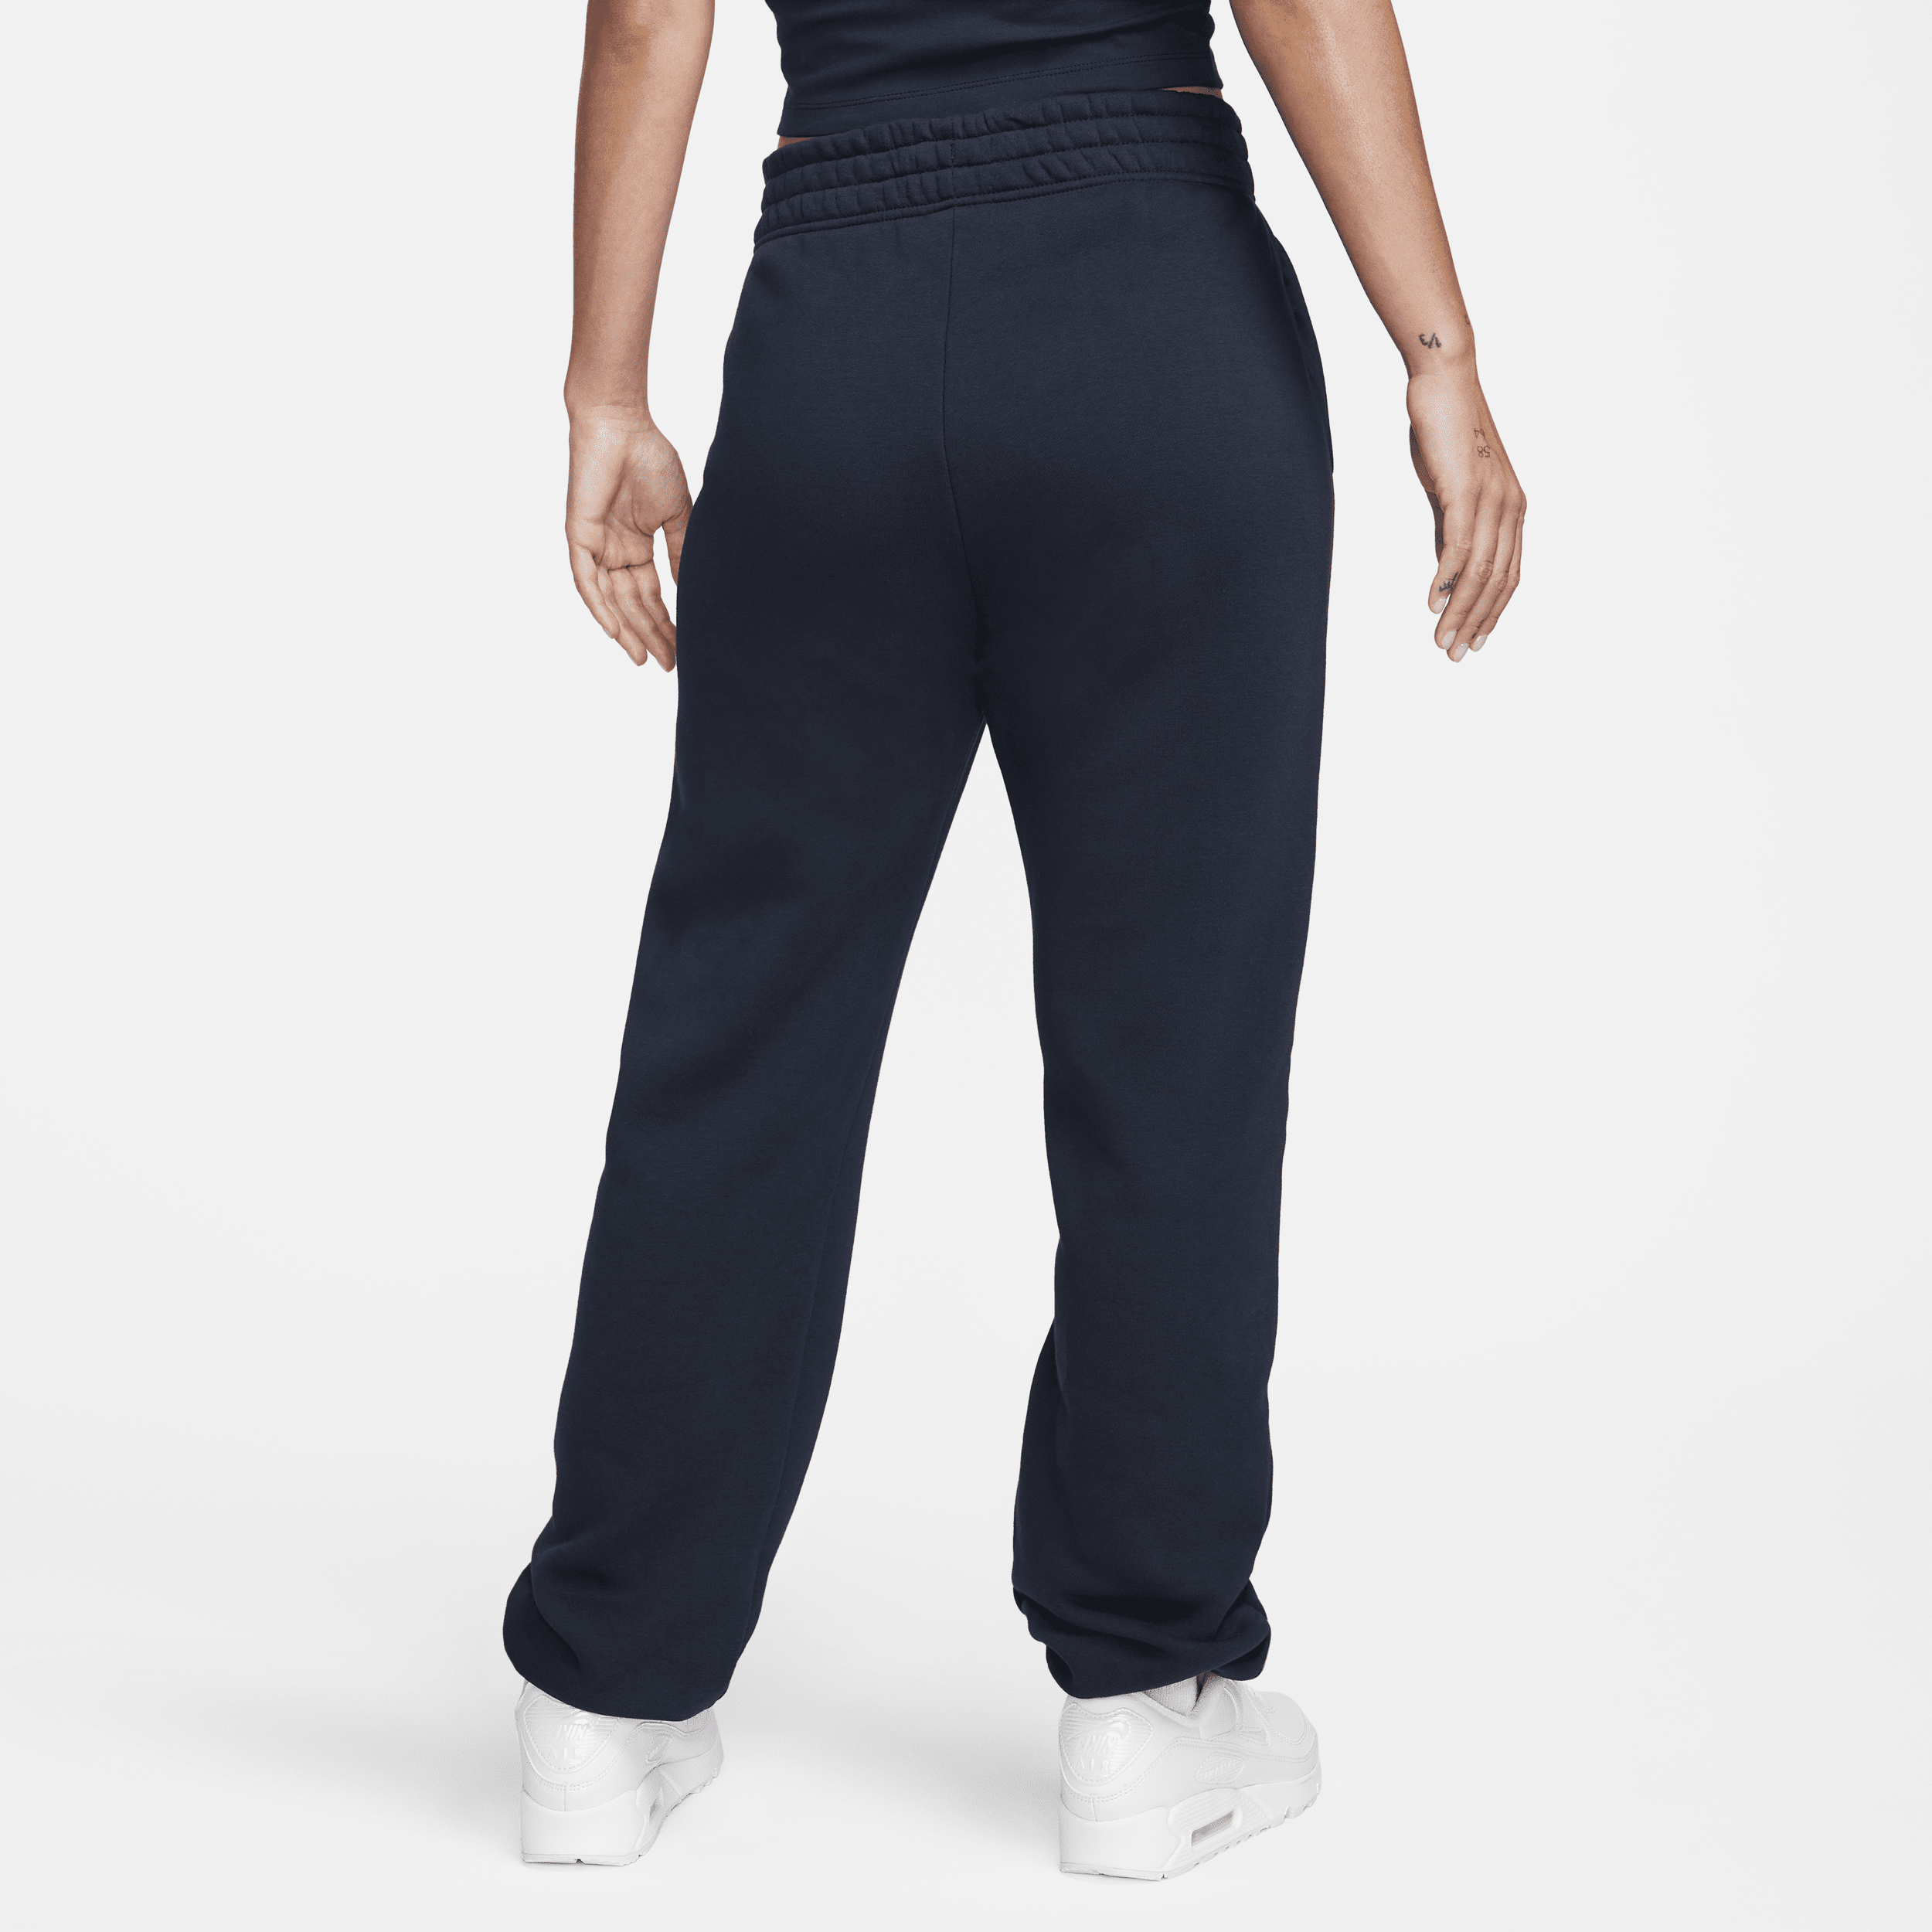 Nike Sportswear damesjoggingbroek van fleece Blauw